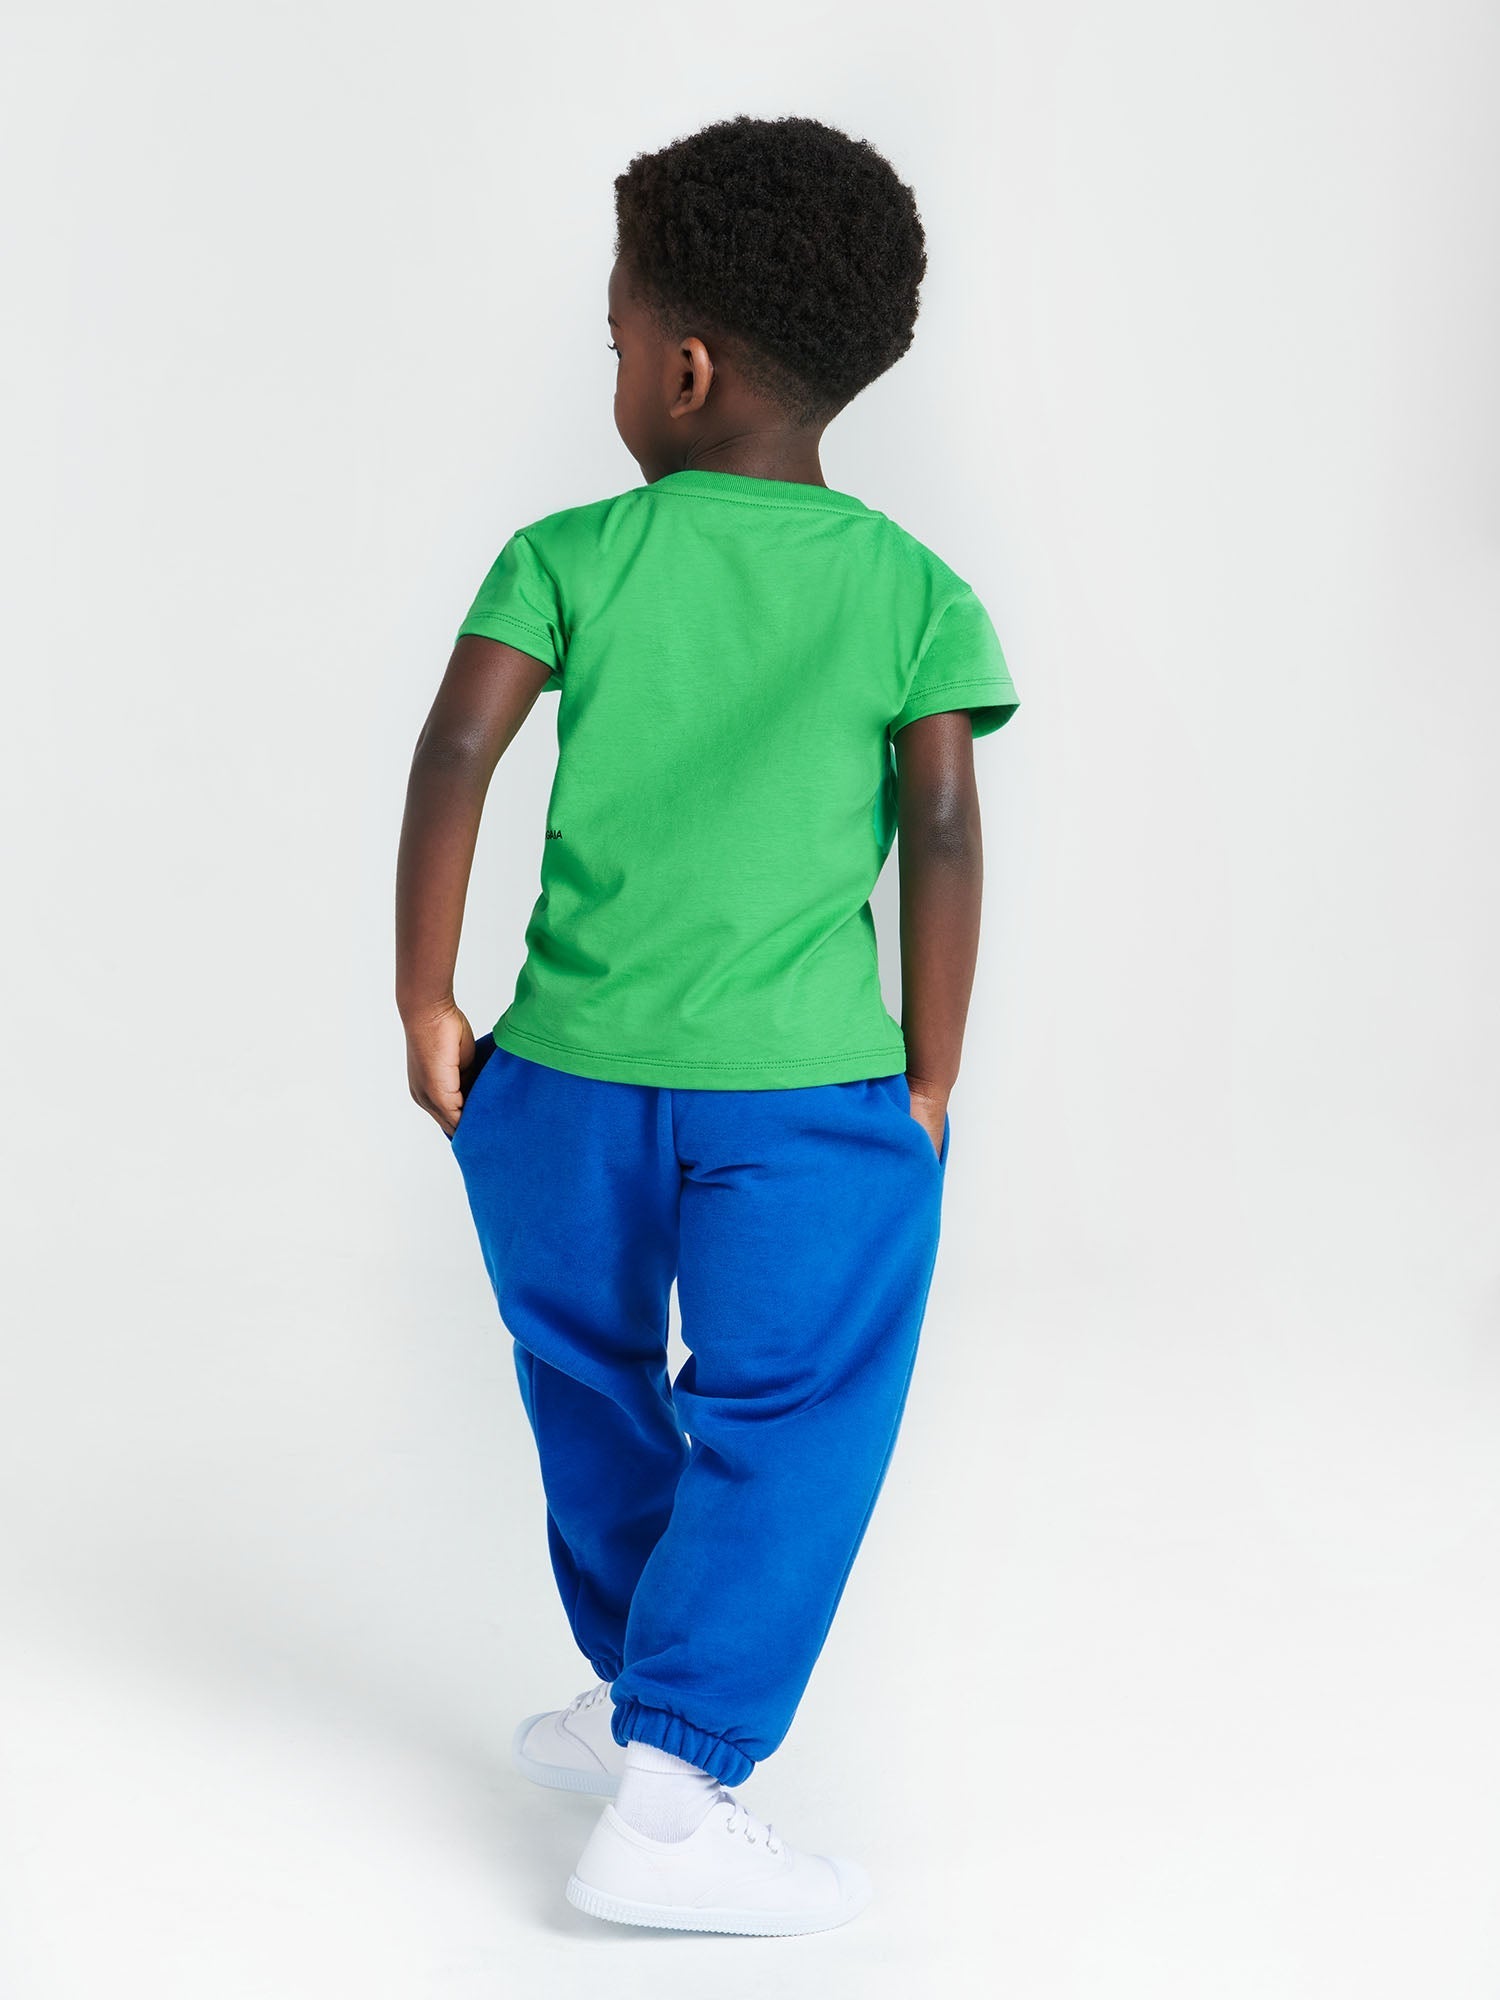 Buy Girls/Boys Uniform Solid Track Pant (Dark Blue, 20) at Amazon.in